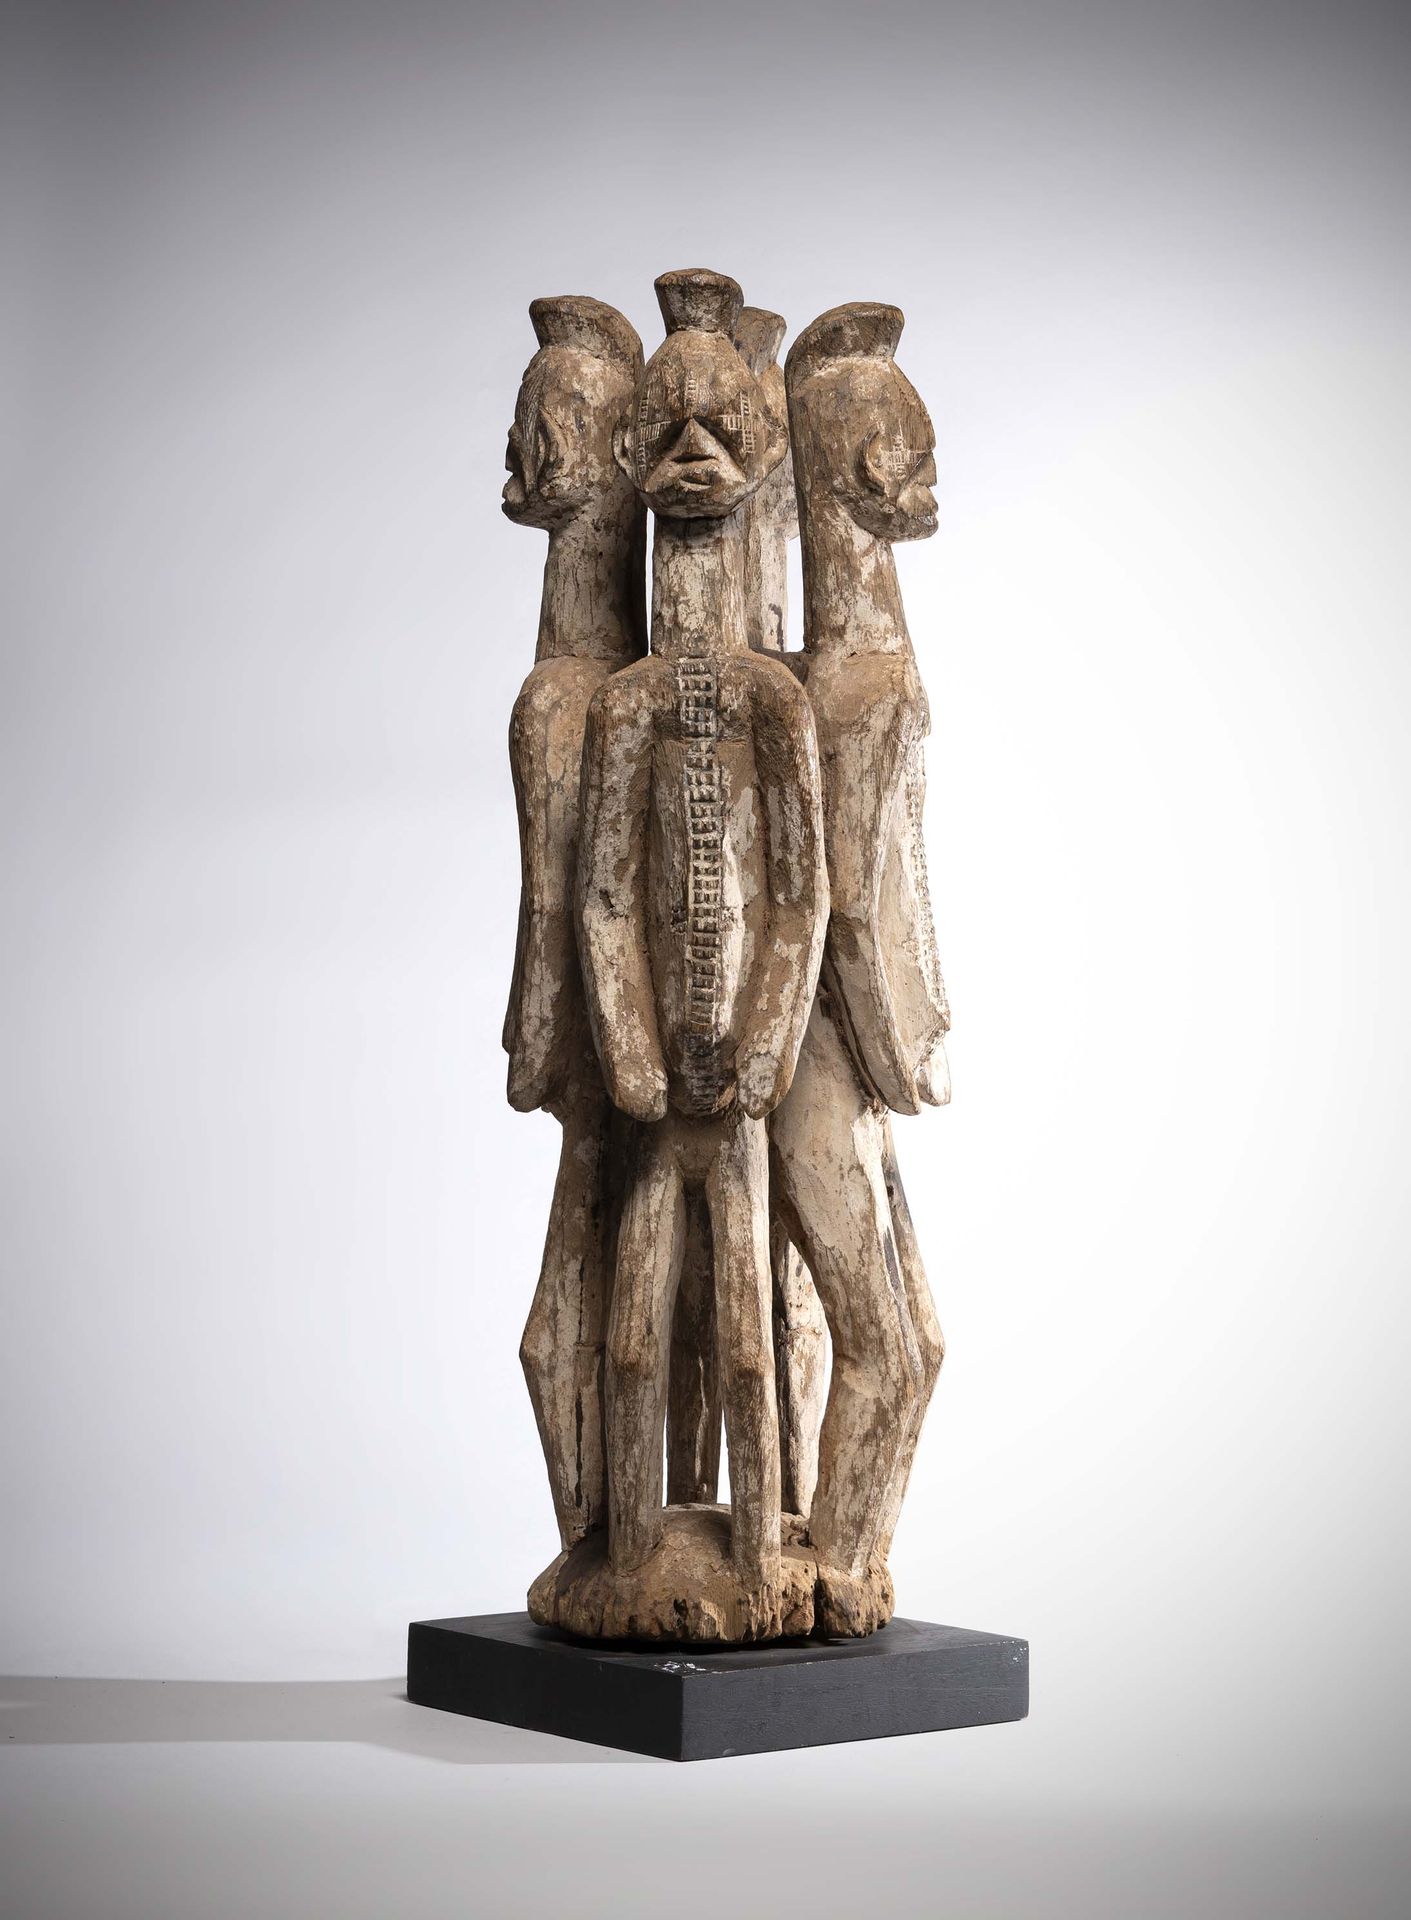 Null Ibo

(Nigéria) Importante sculpture d'autel constituée de quatre statues ma&hellip;